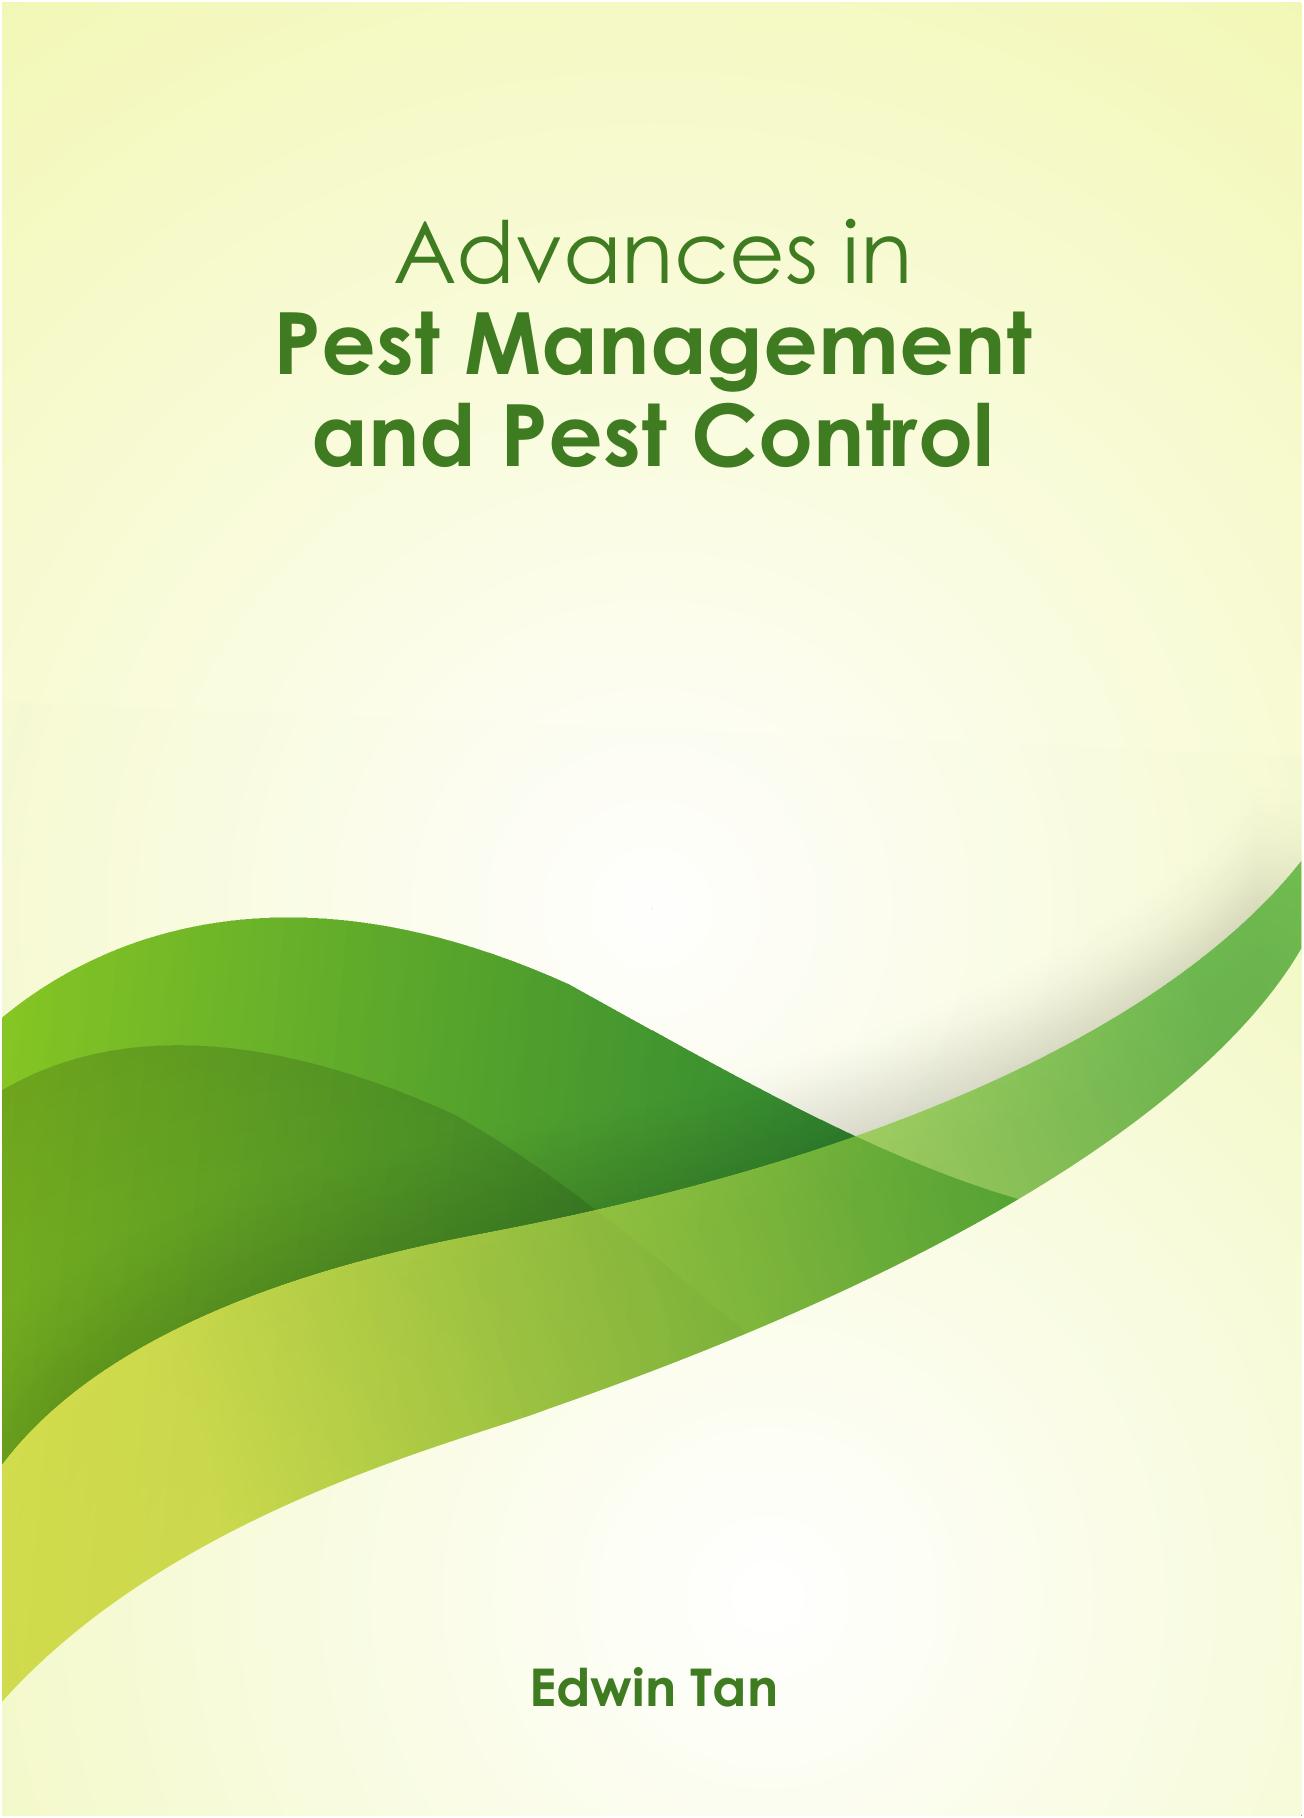 Advances in Pest Management and Pest Control 2014